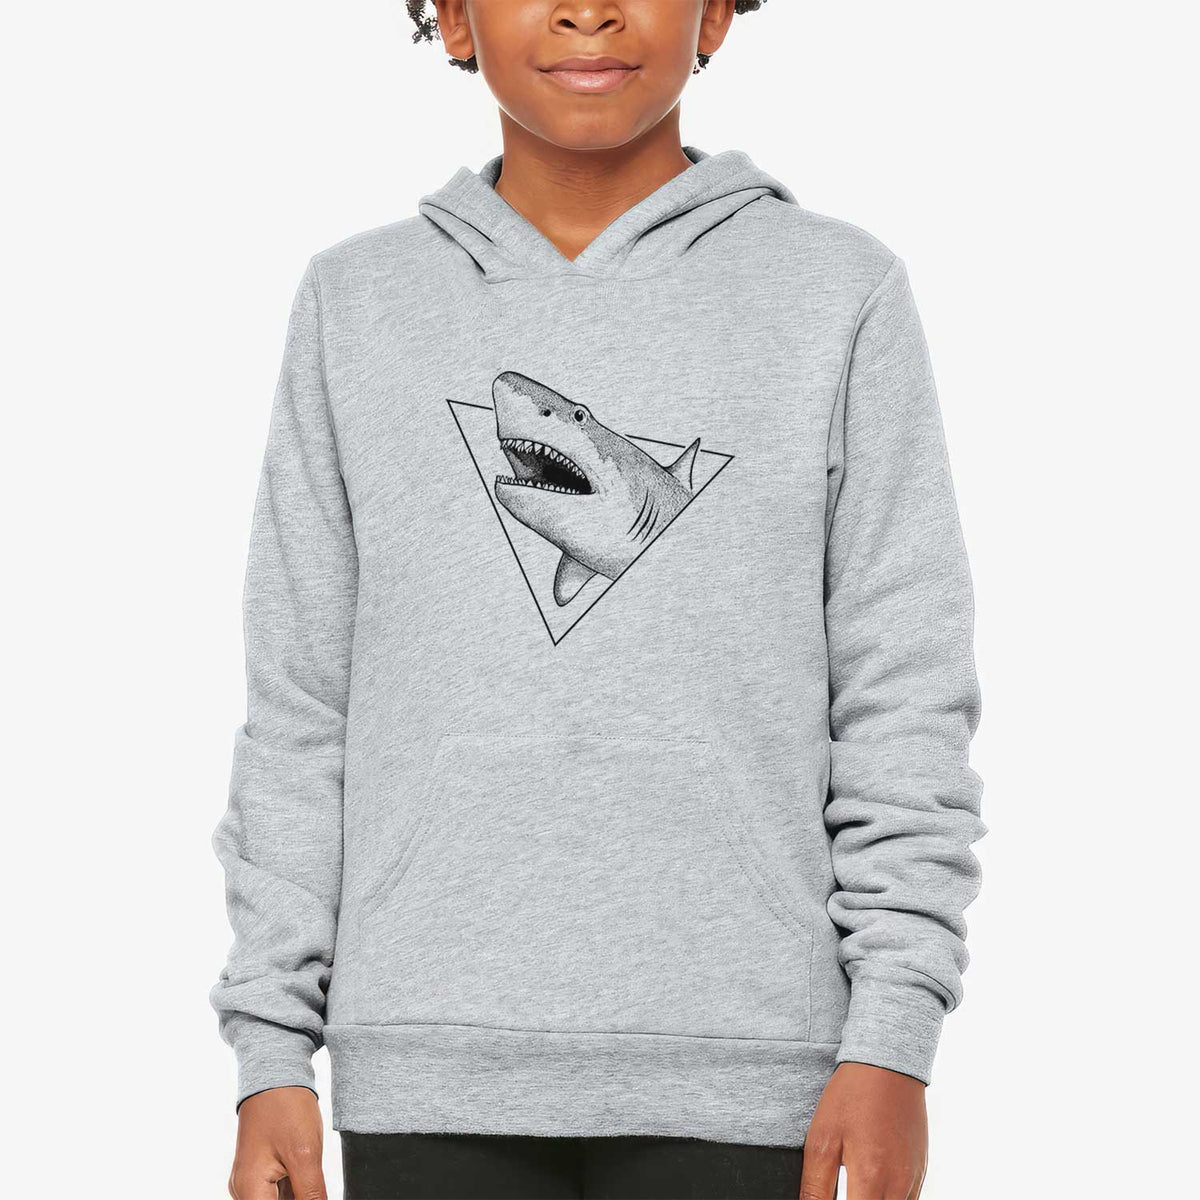 Great White Shark Triangle - Youth Hoodie Sweatshirt